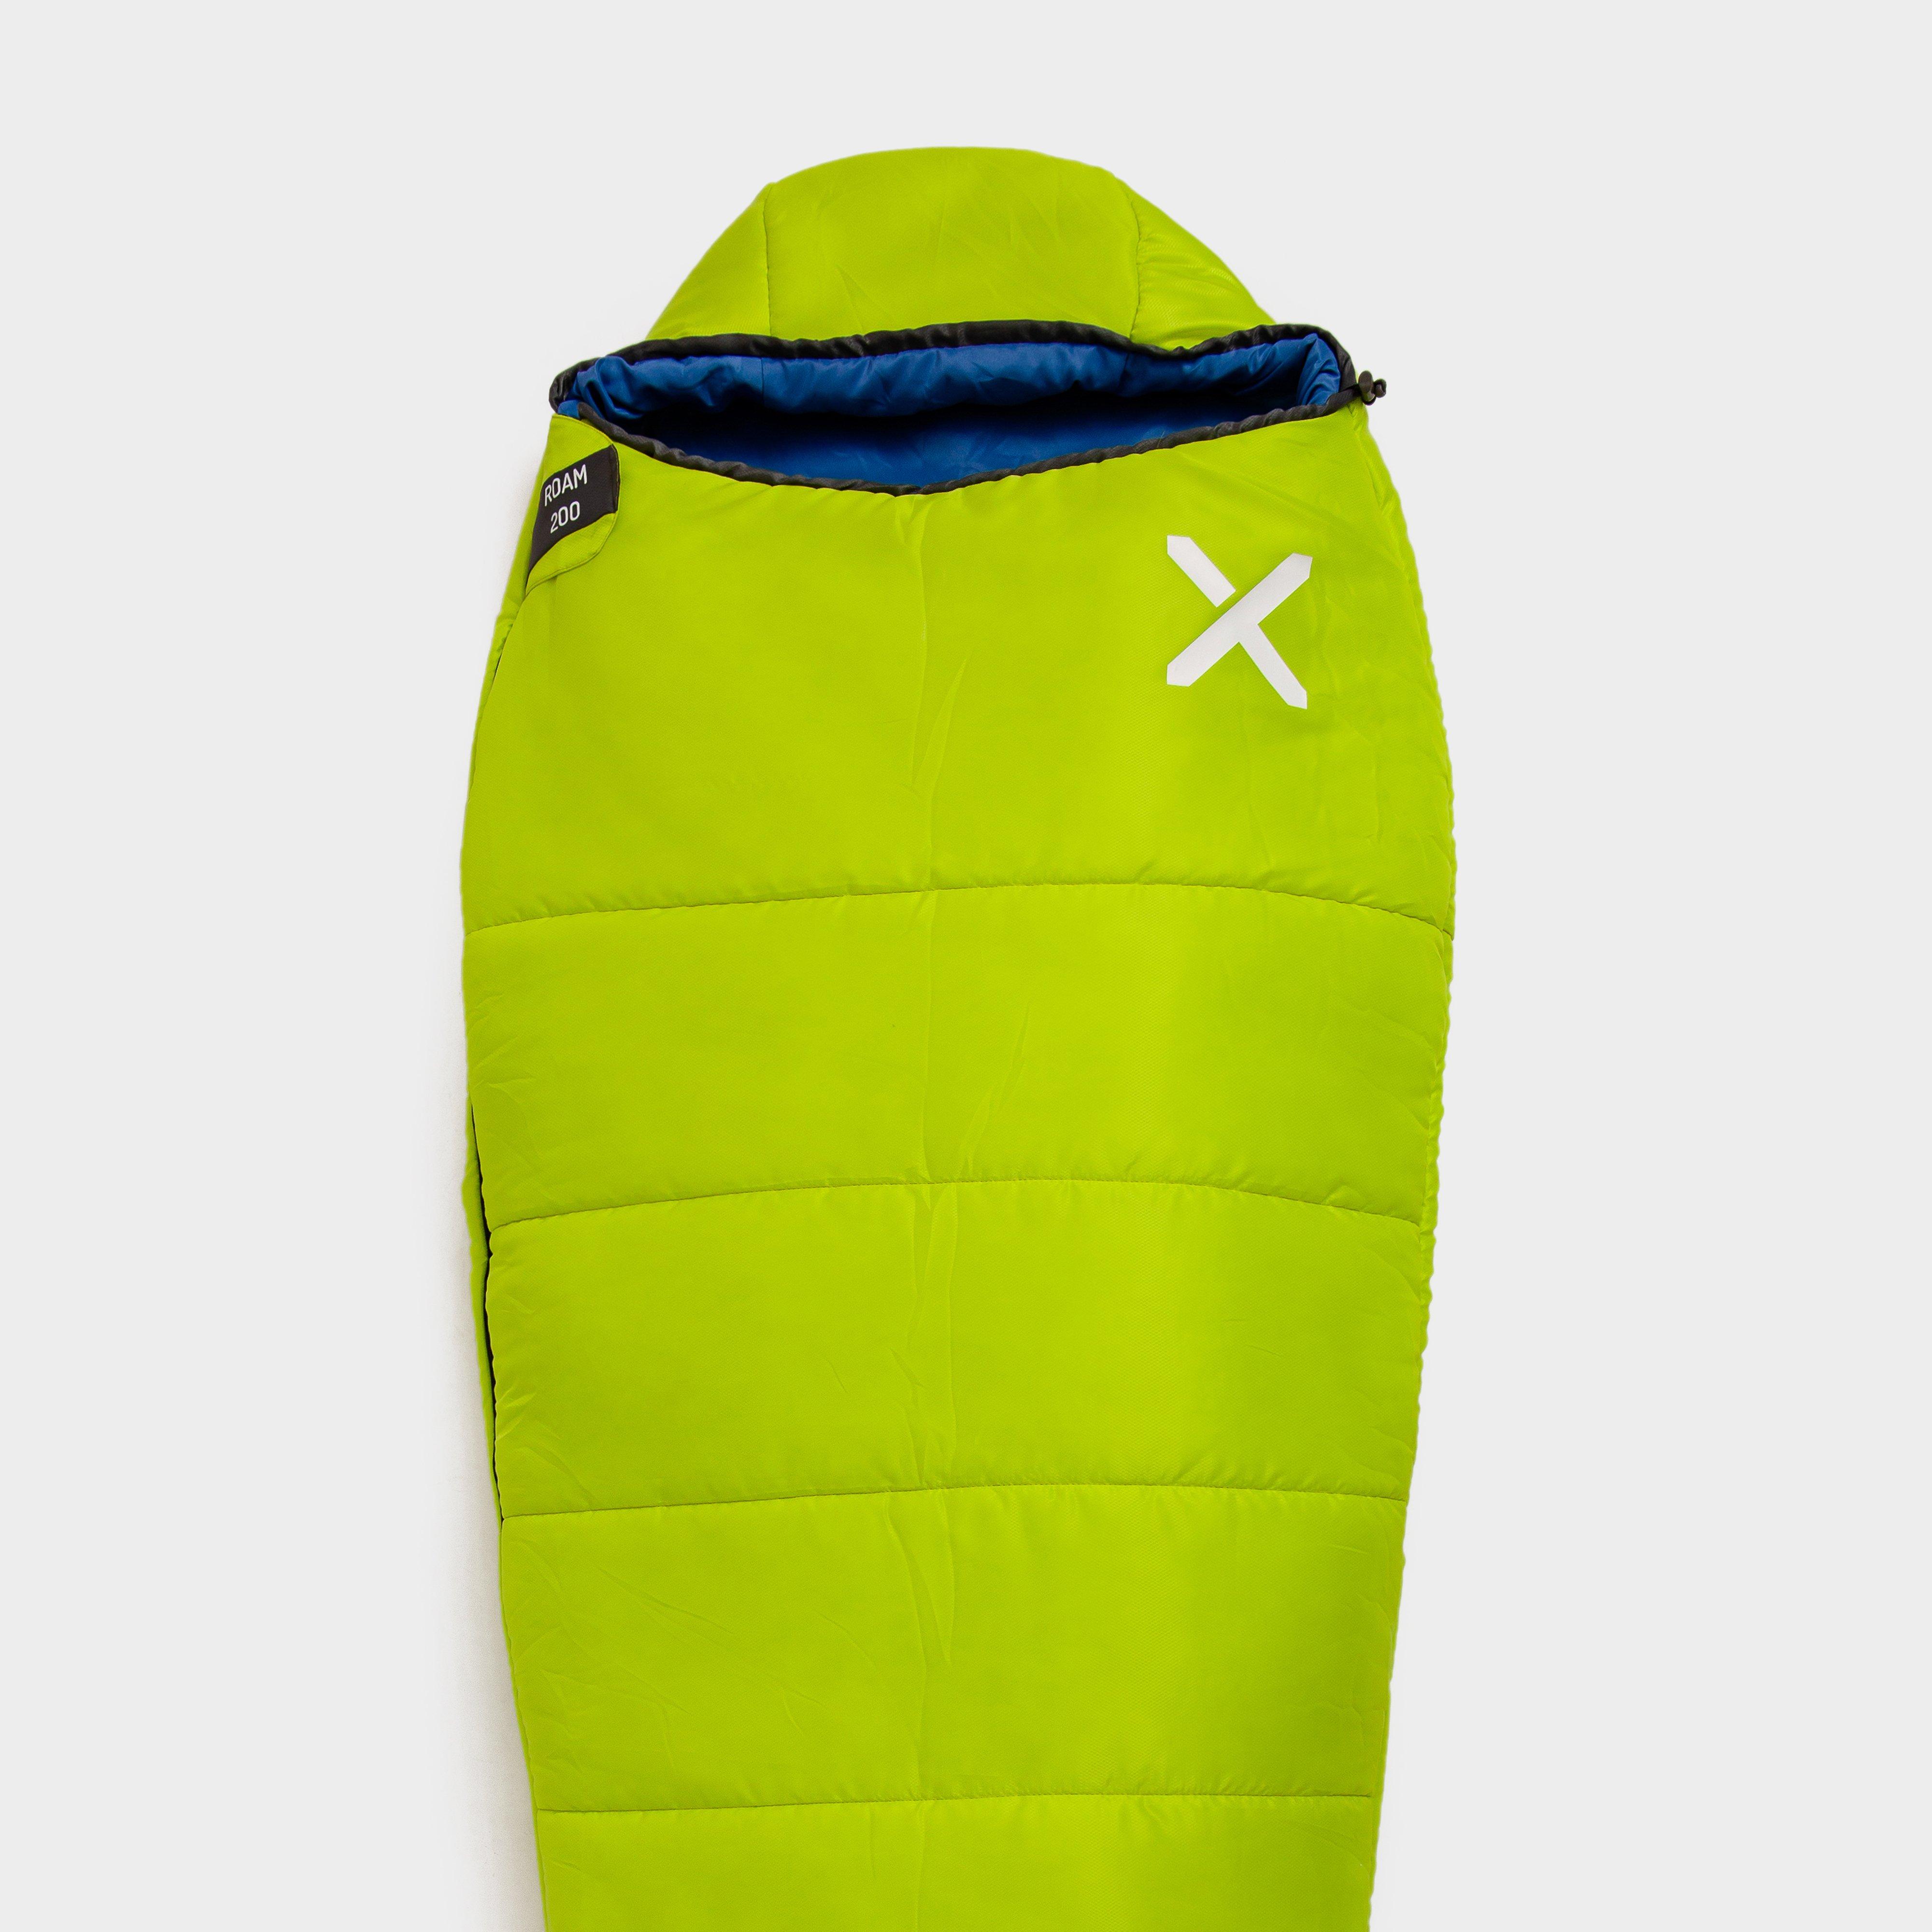  OEX Roam 200 Sleeping Bag, Green